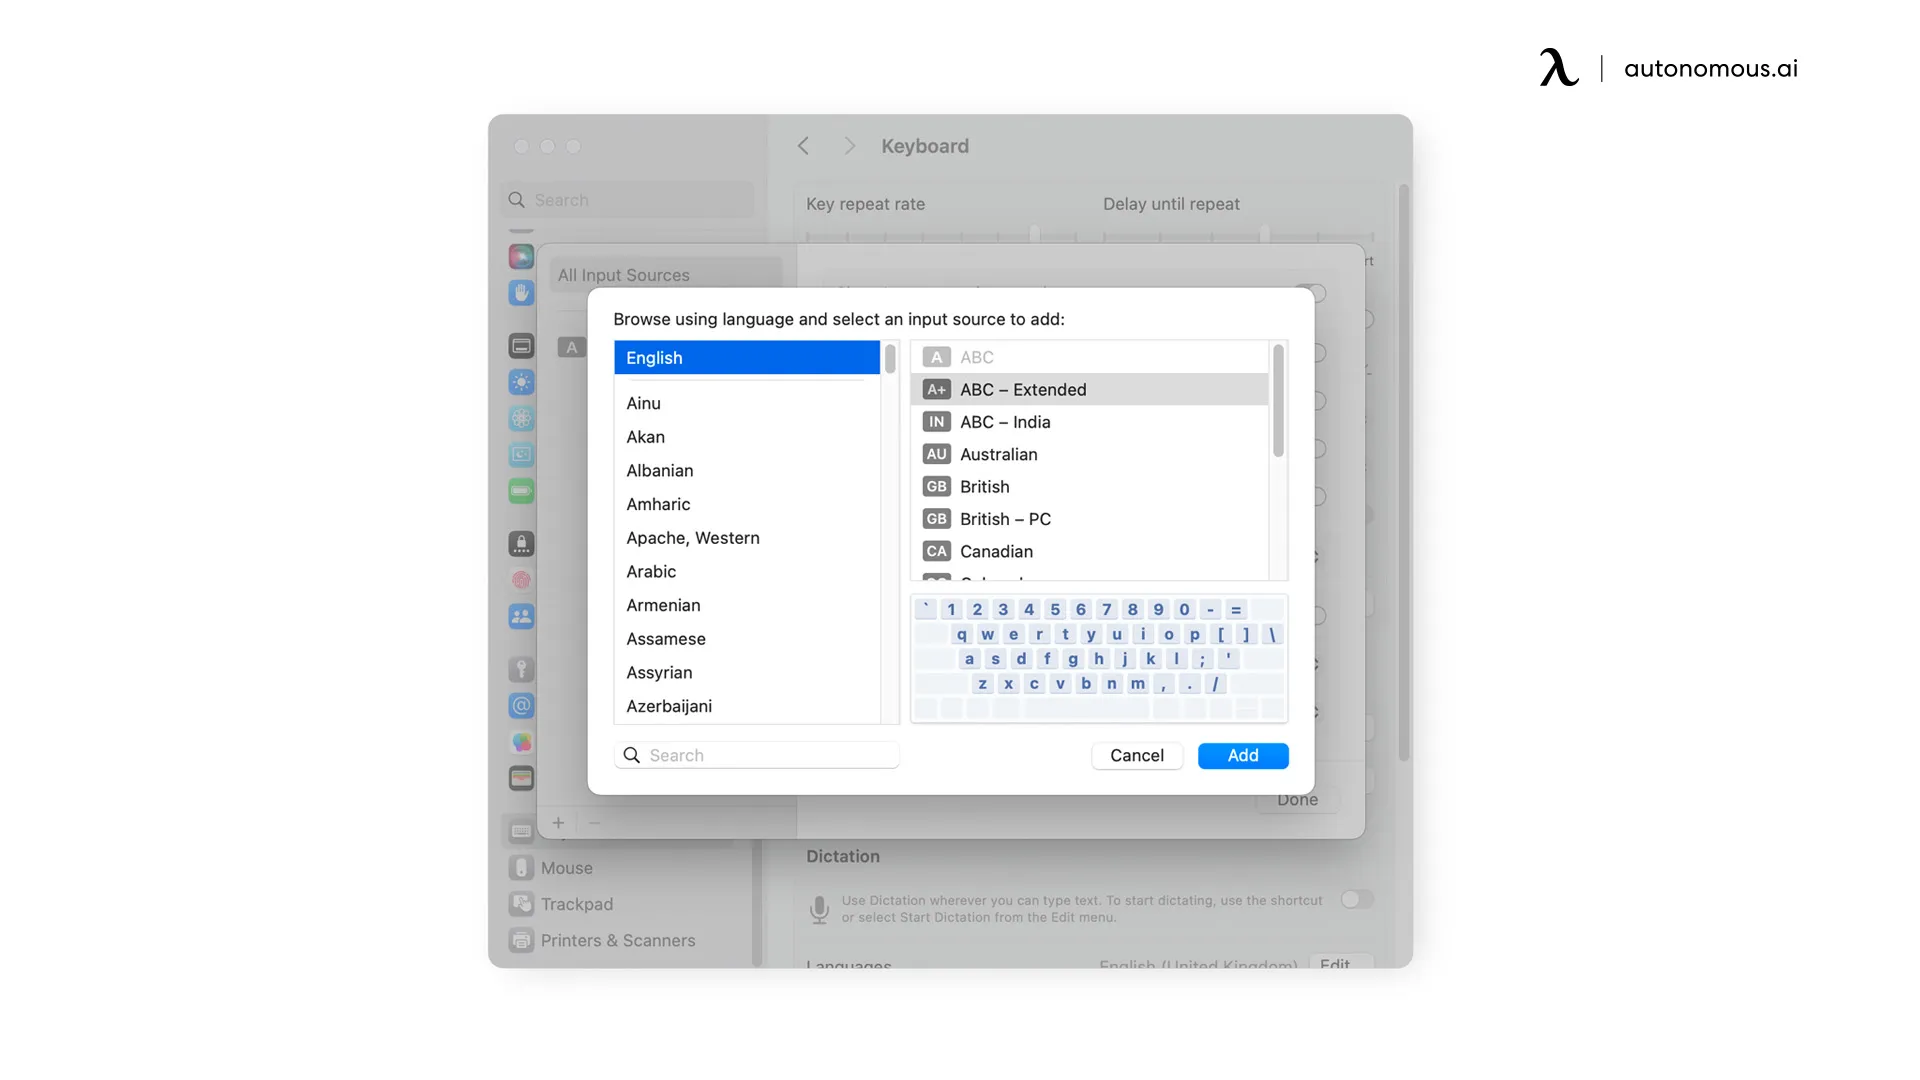 Step 4: Add a New Language to change MacBook keyboard language